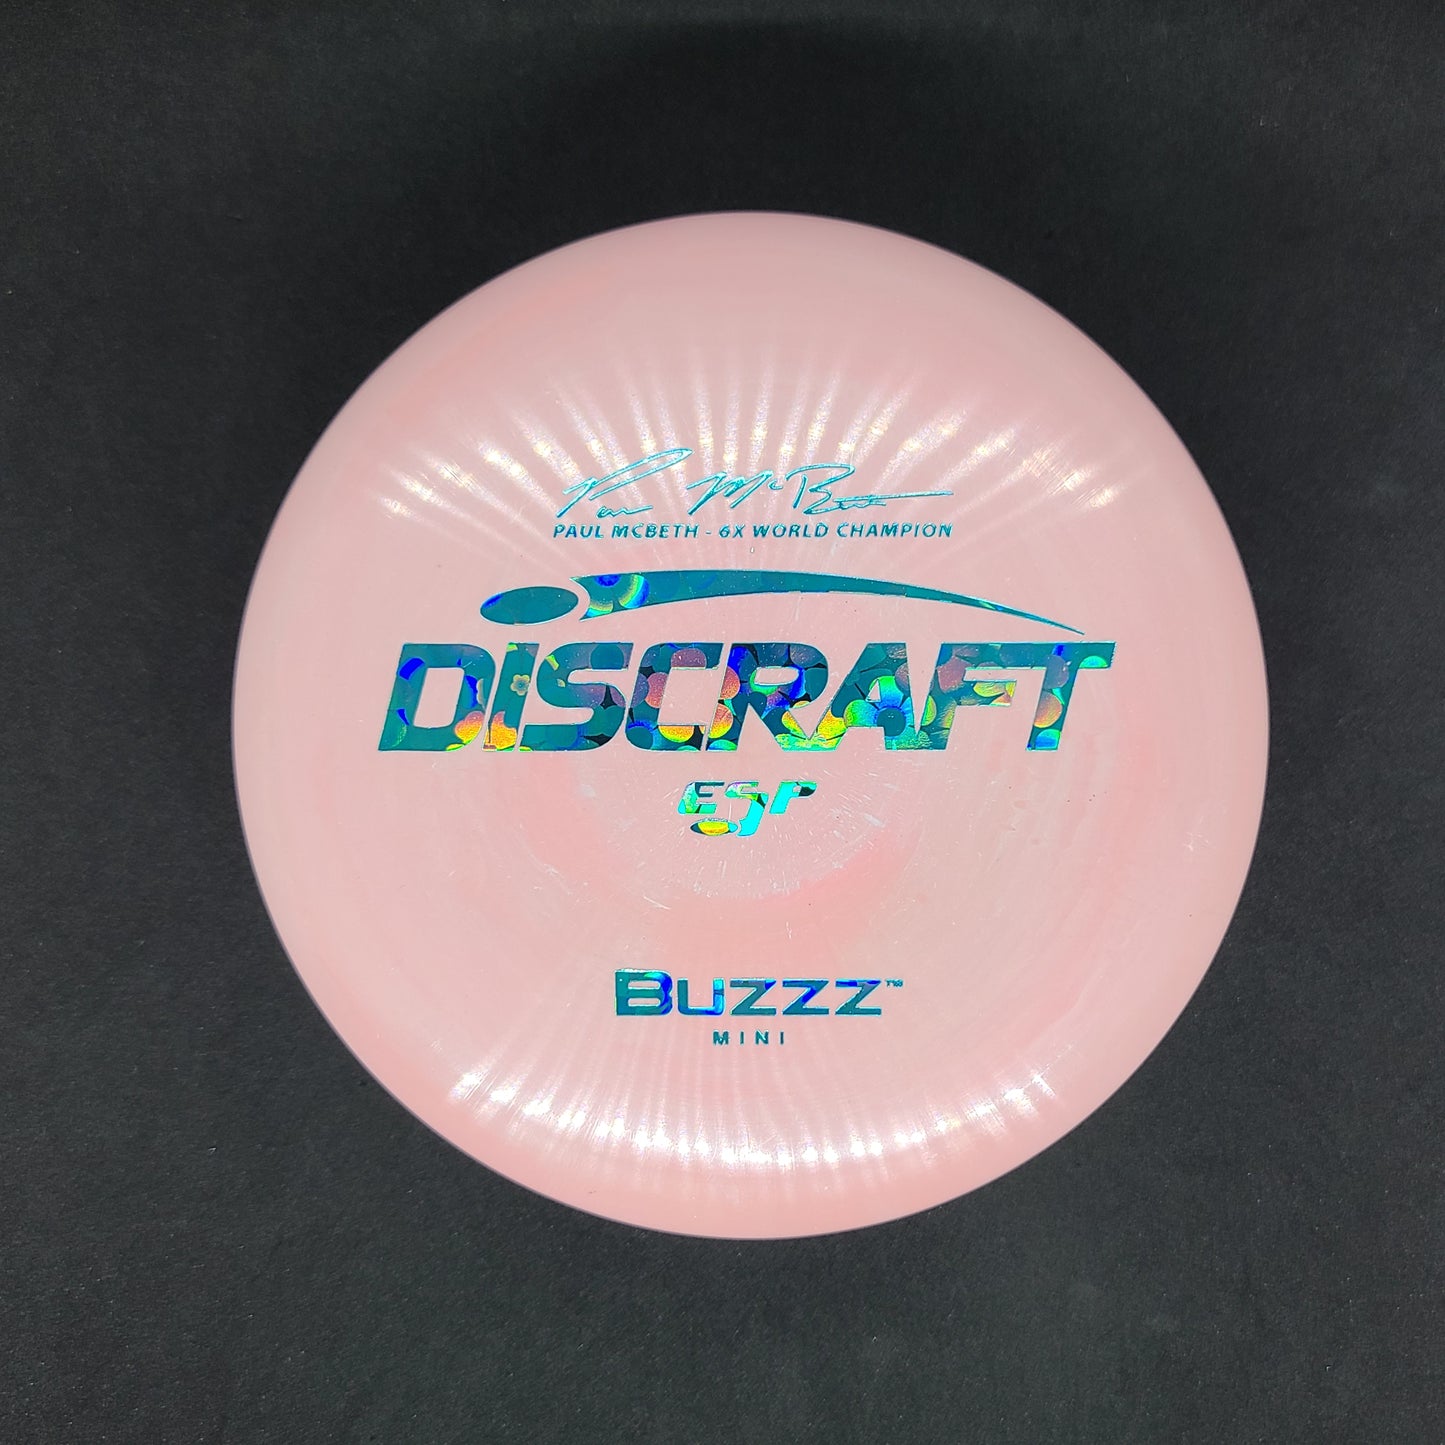 Discraft - Macro Mini - ESP buzzz Paul McBeth